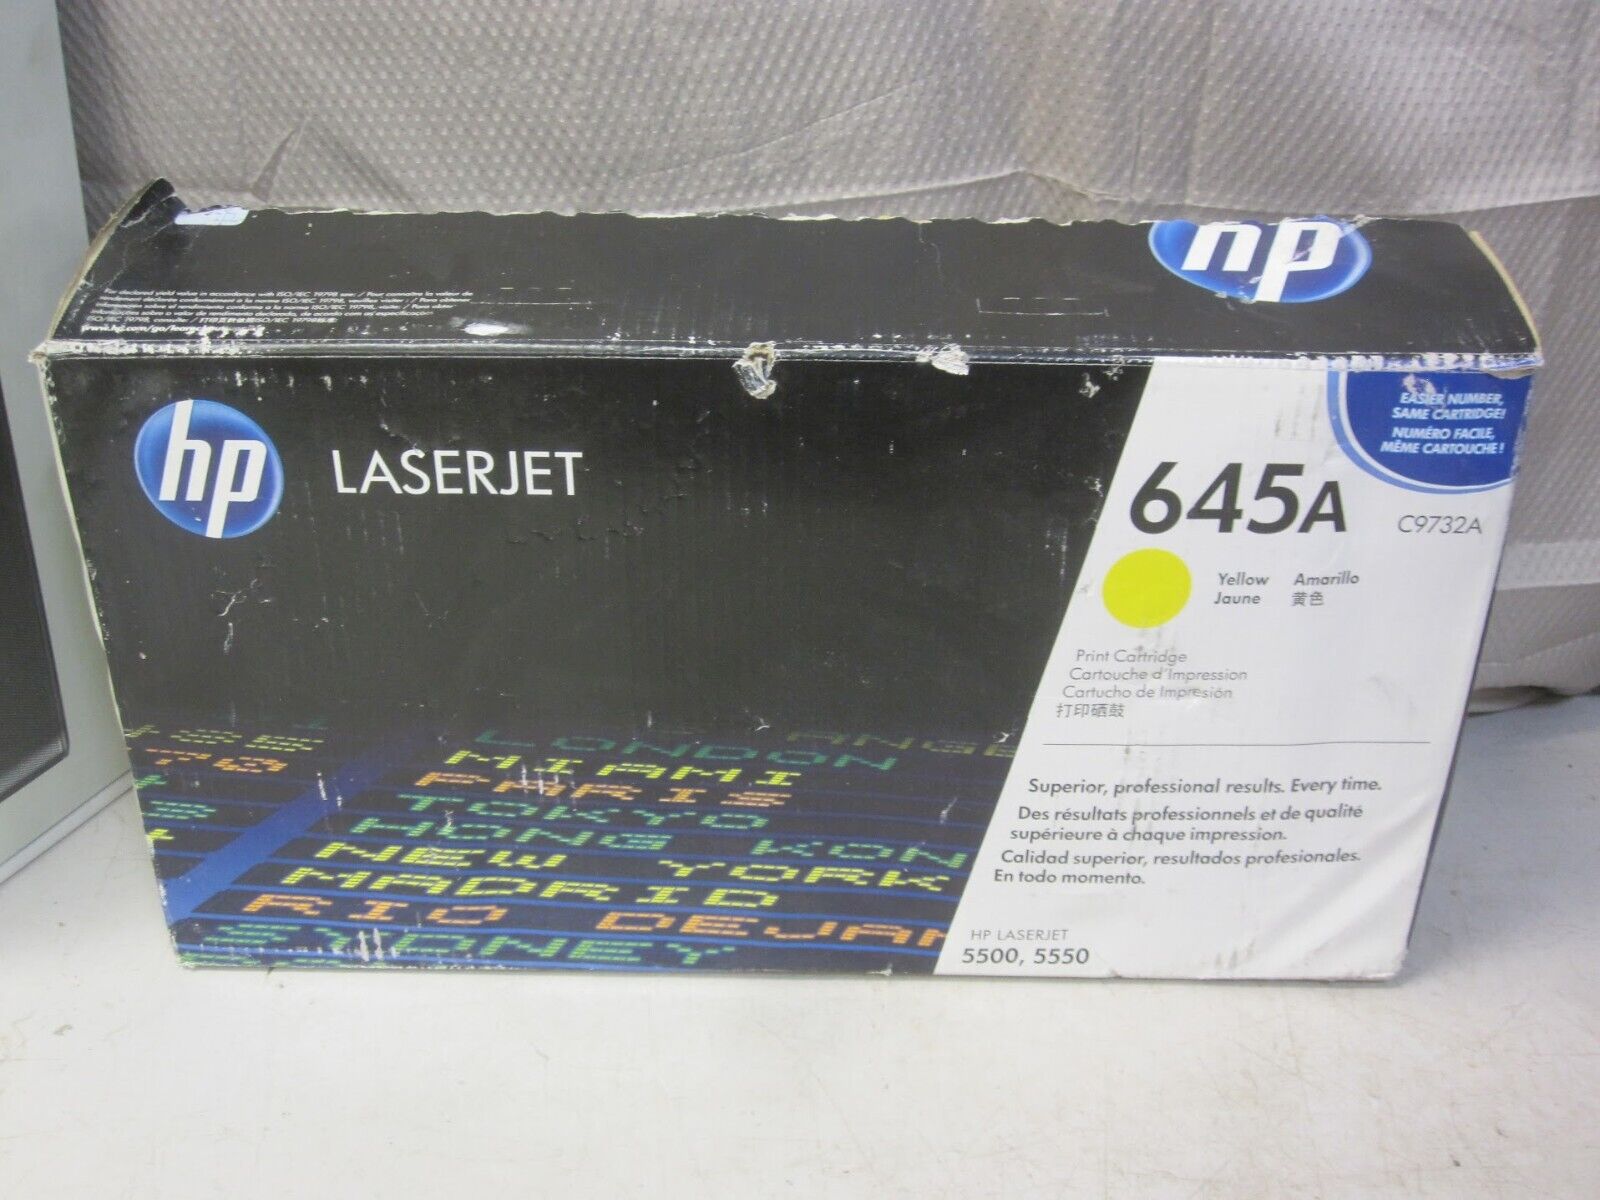 Genuine HP 645A Yellow Toner Print Cartridge C9732A - Factory Sealed Bag